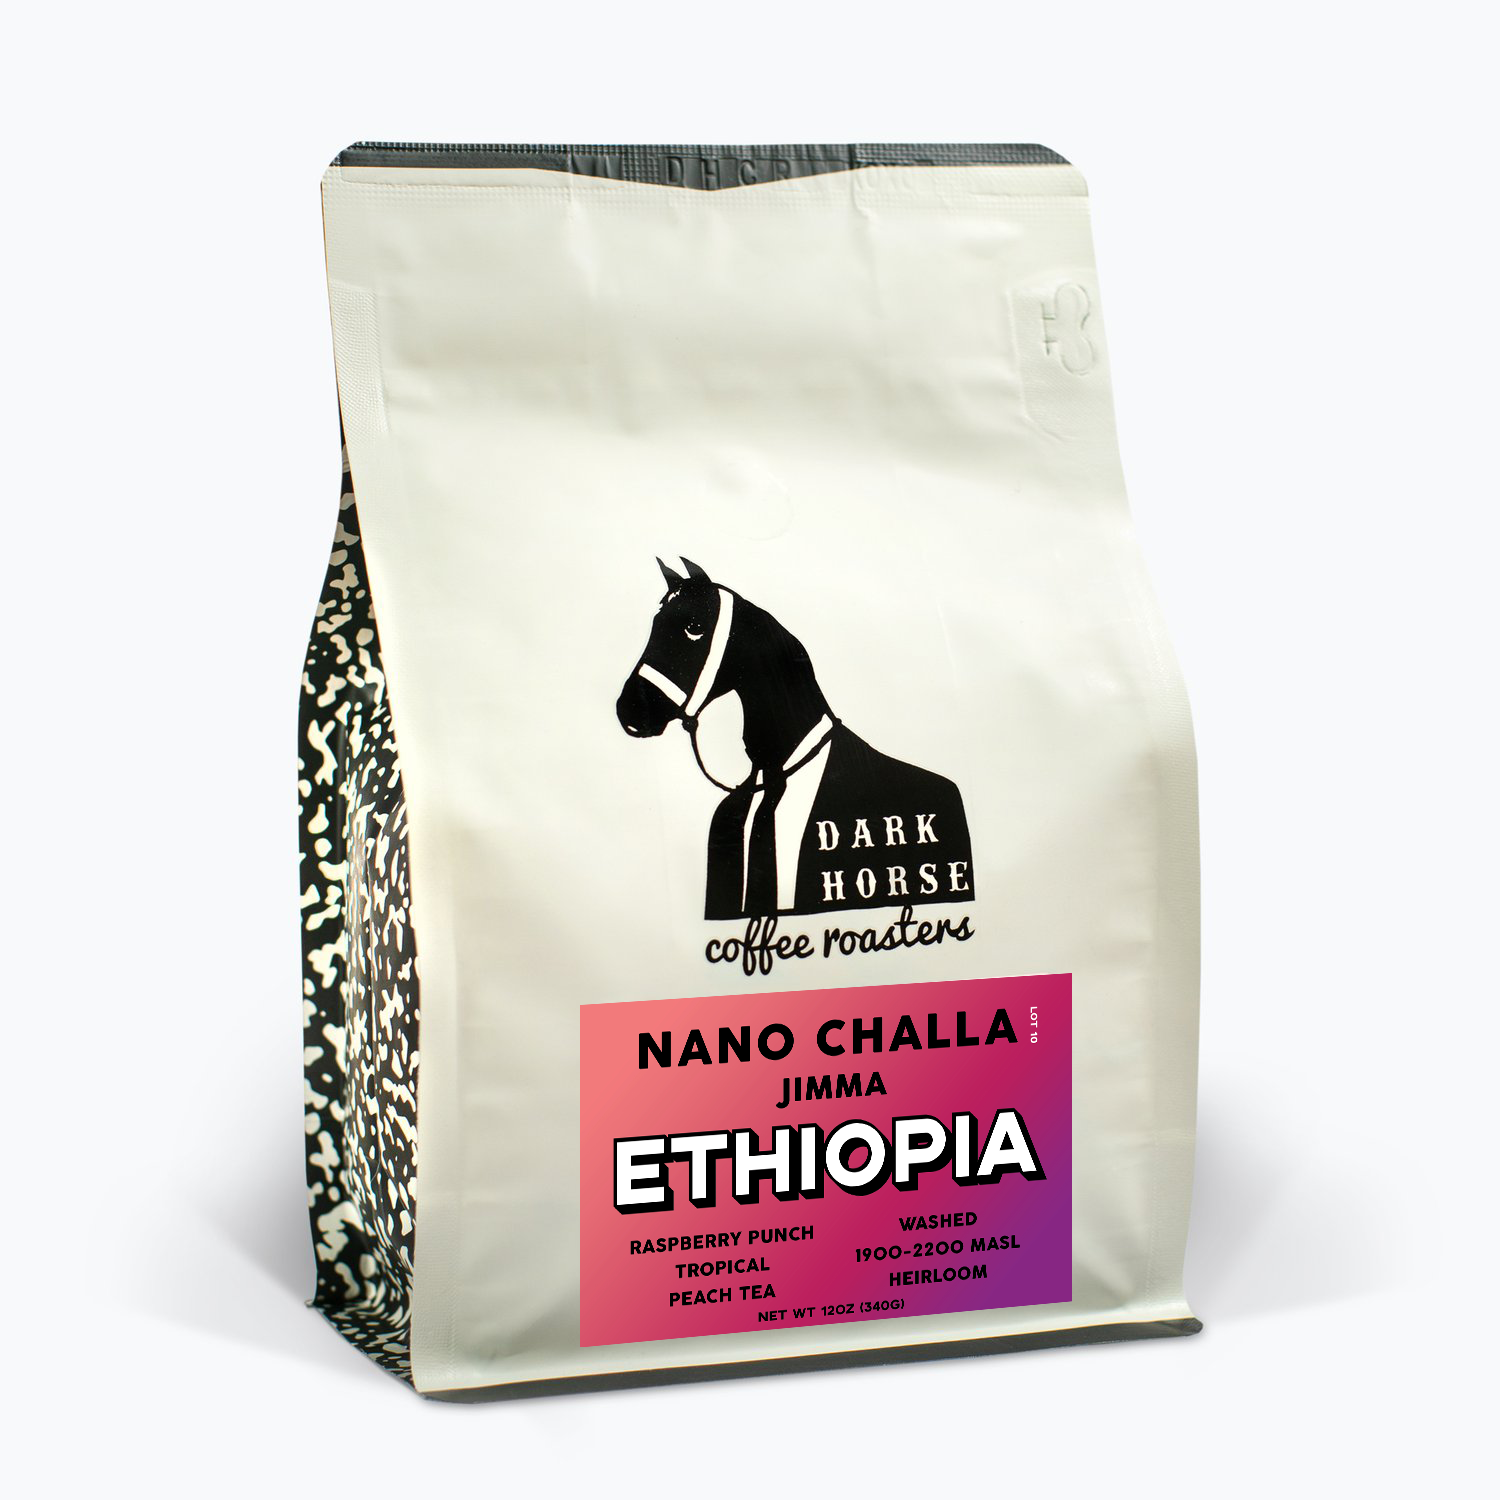 Ethiopia coffee from Dark Horse Coffee Roasters